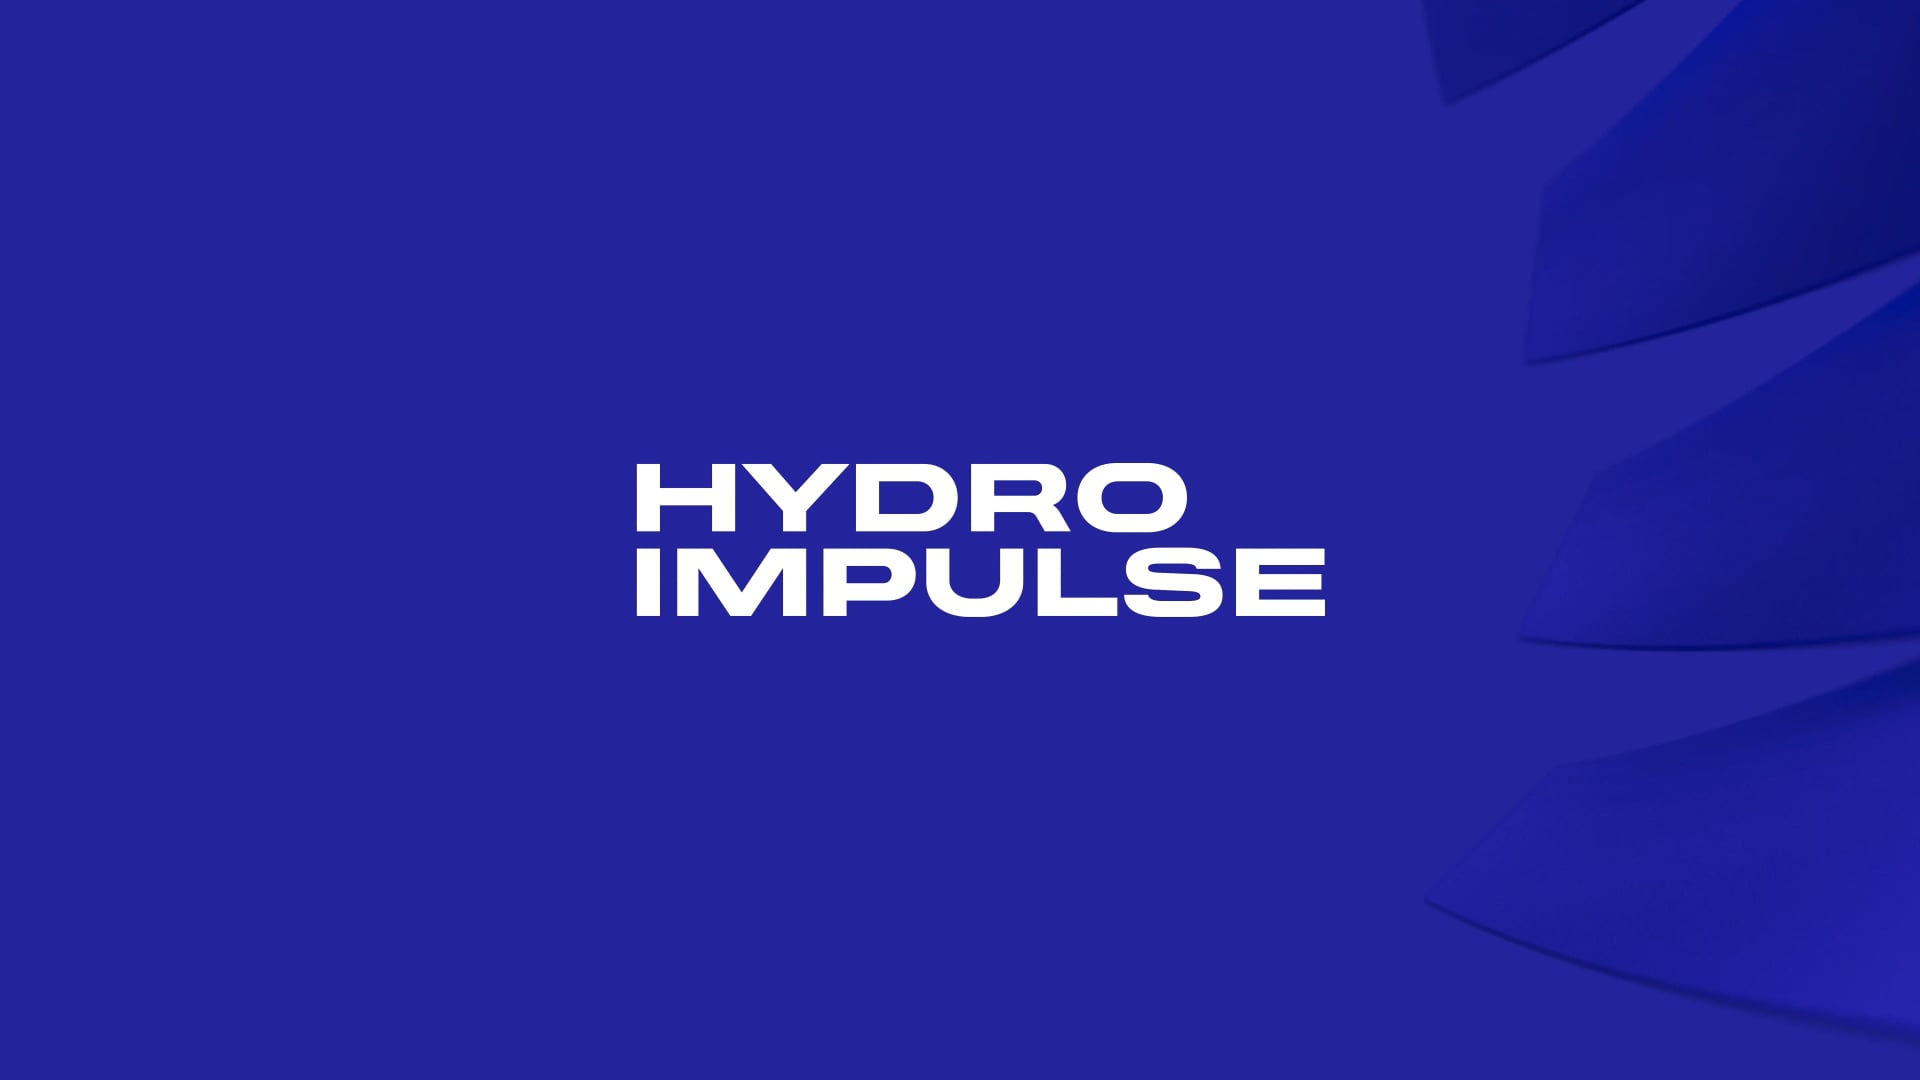 Hydro 3 on Vimeo